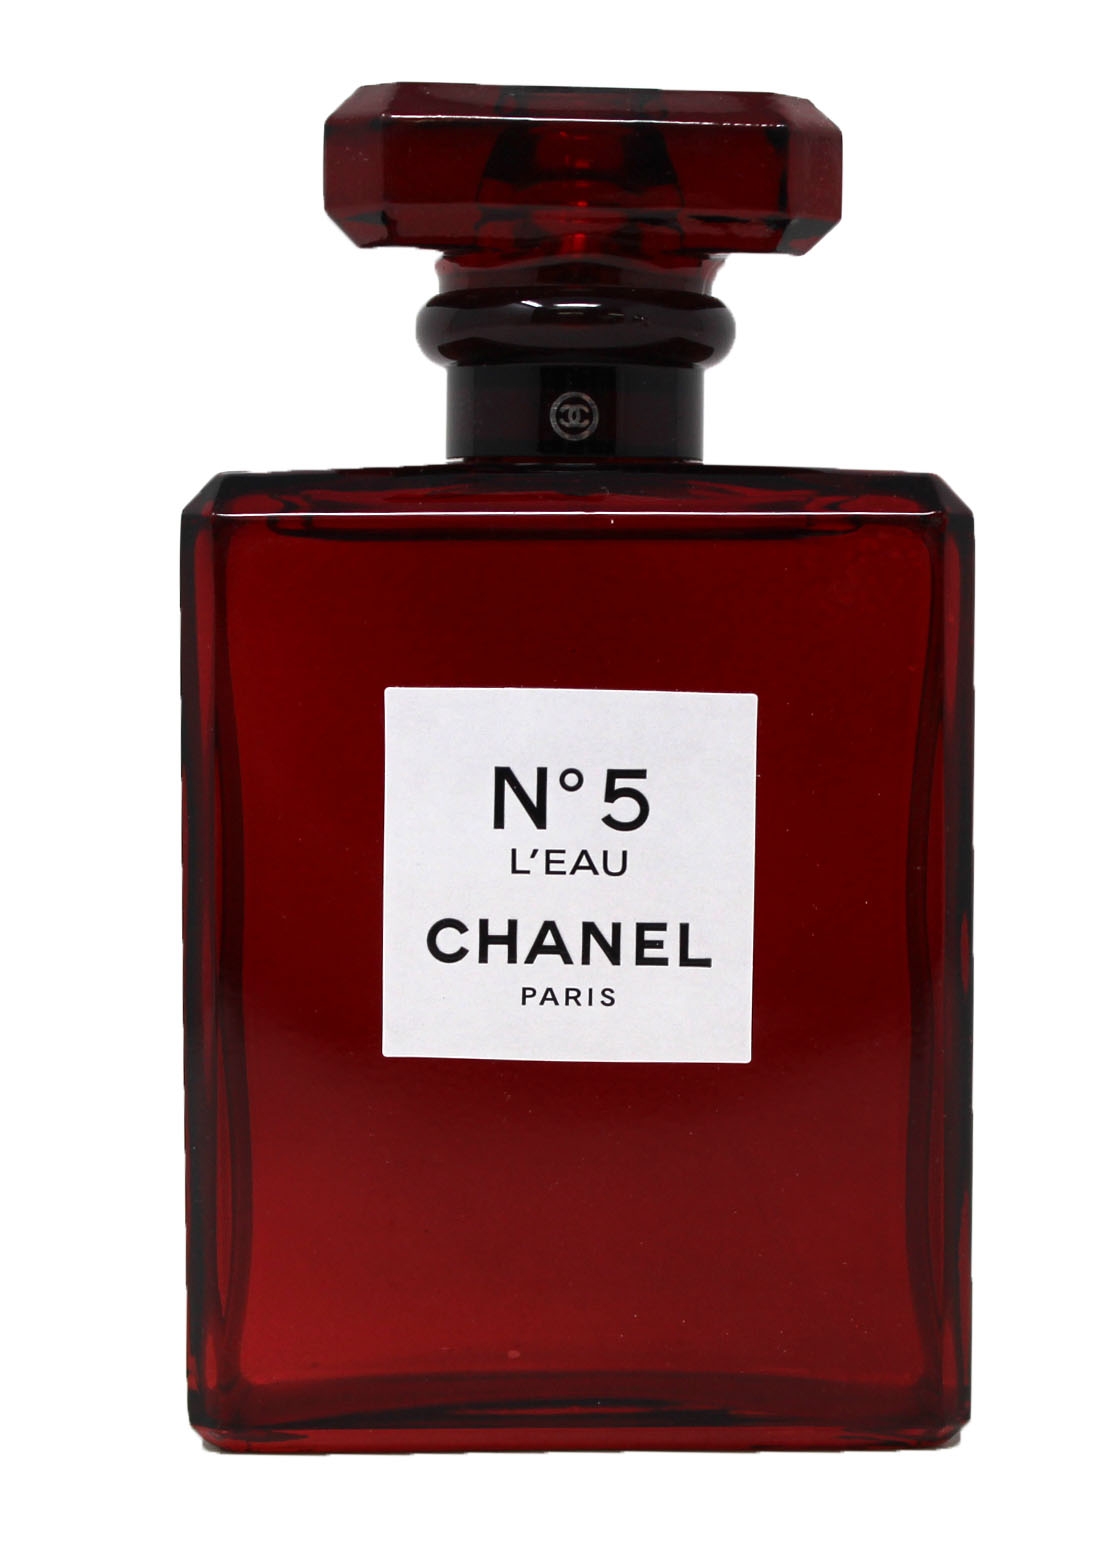 Nước hoa nữ CHANEL No.5 EDP Red Limited Edition 100ml / Chanel No 5 L'Eau Red Edition Eau De Toilette 3.4 Ounces